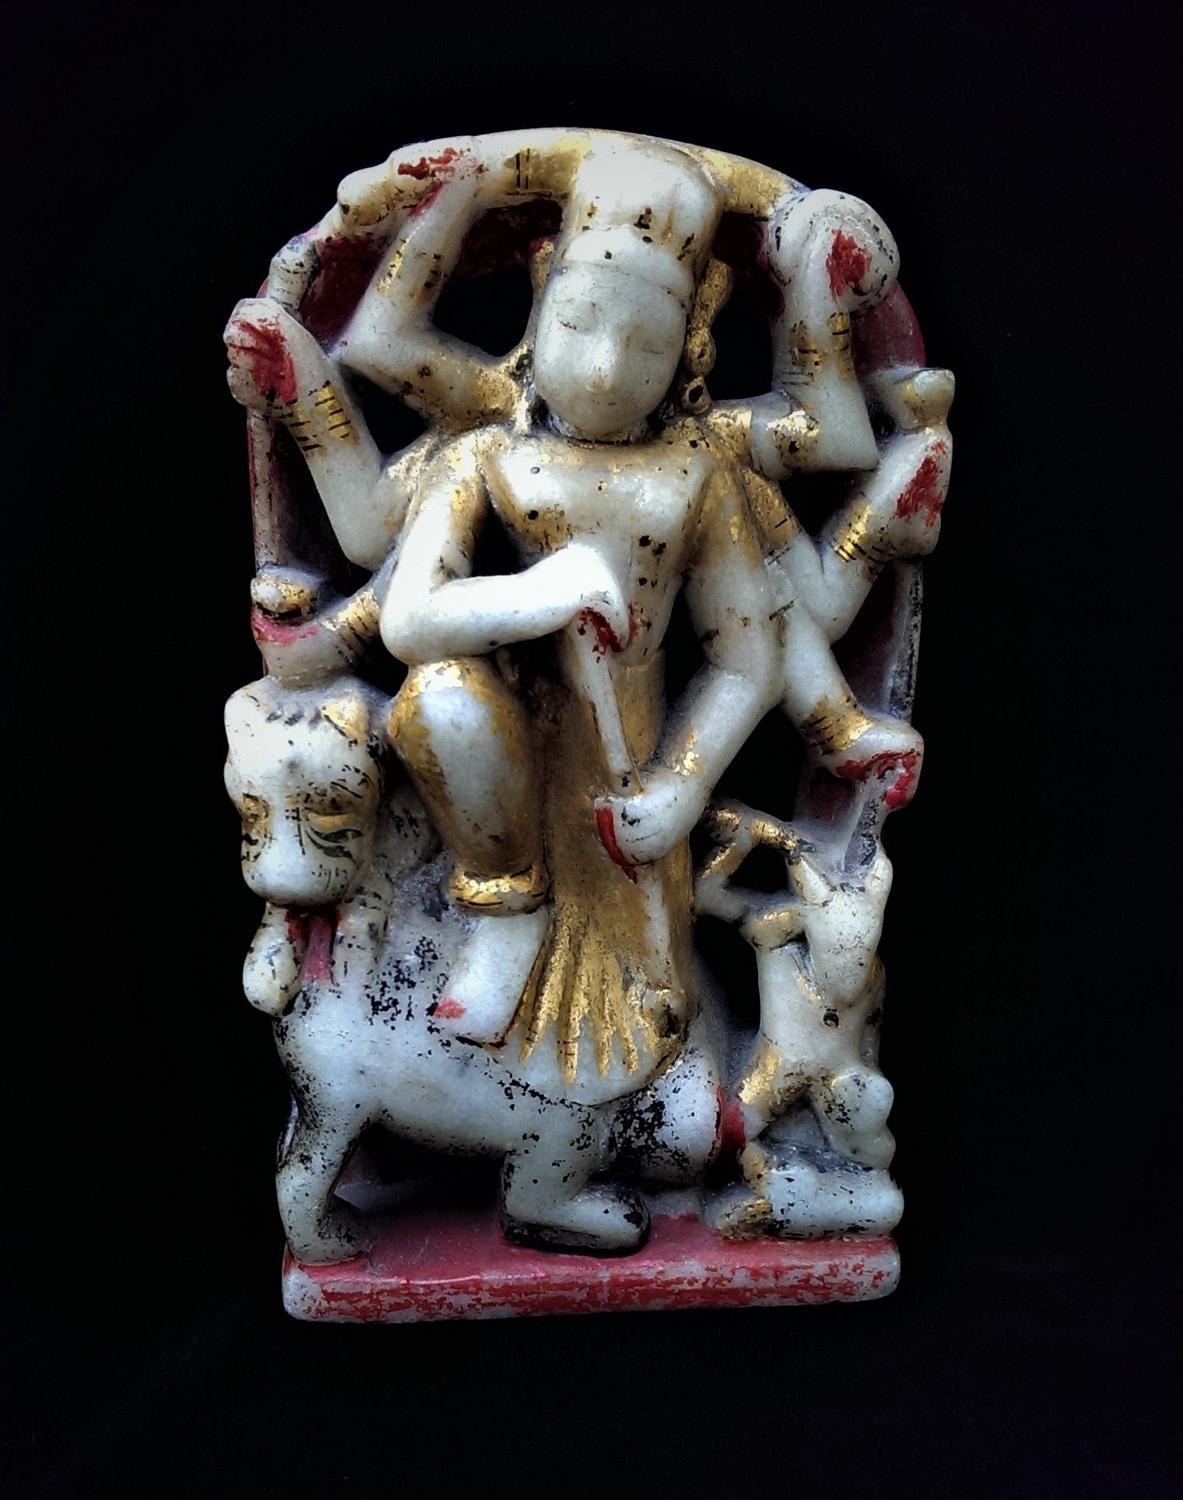 Indian Statuette of Goddess Durga Slaying Mahishasura (Buffalo Demon)